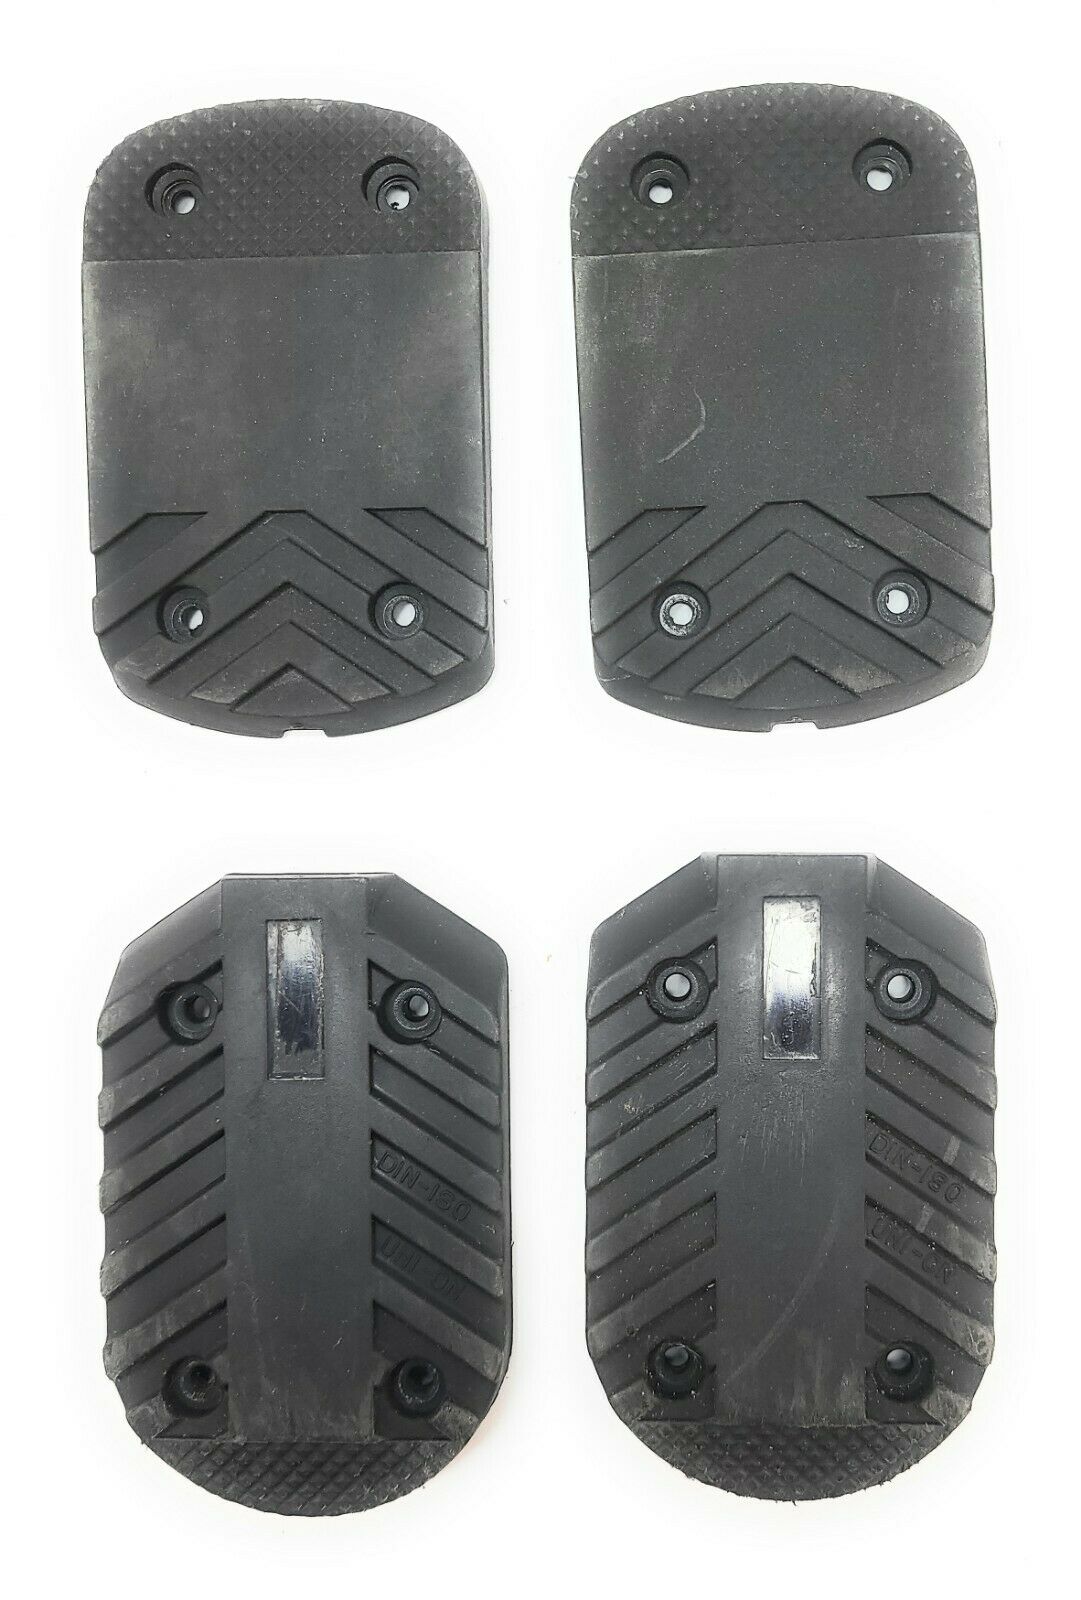 Nordica Multi Macro F5 F6 Ski Boots Replacement Heel + Toe Sole Kit Set Black